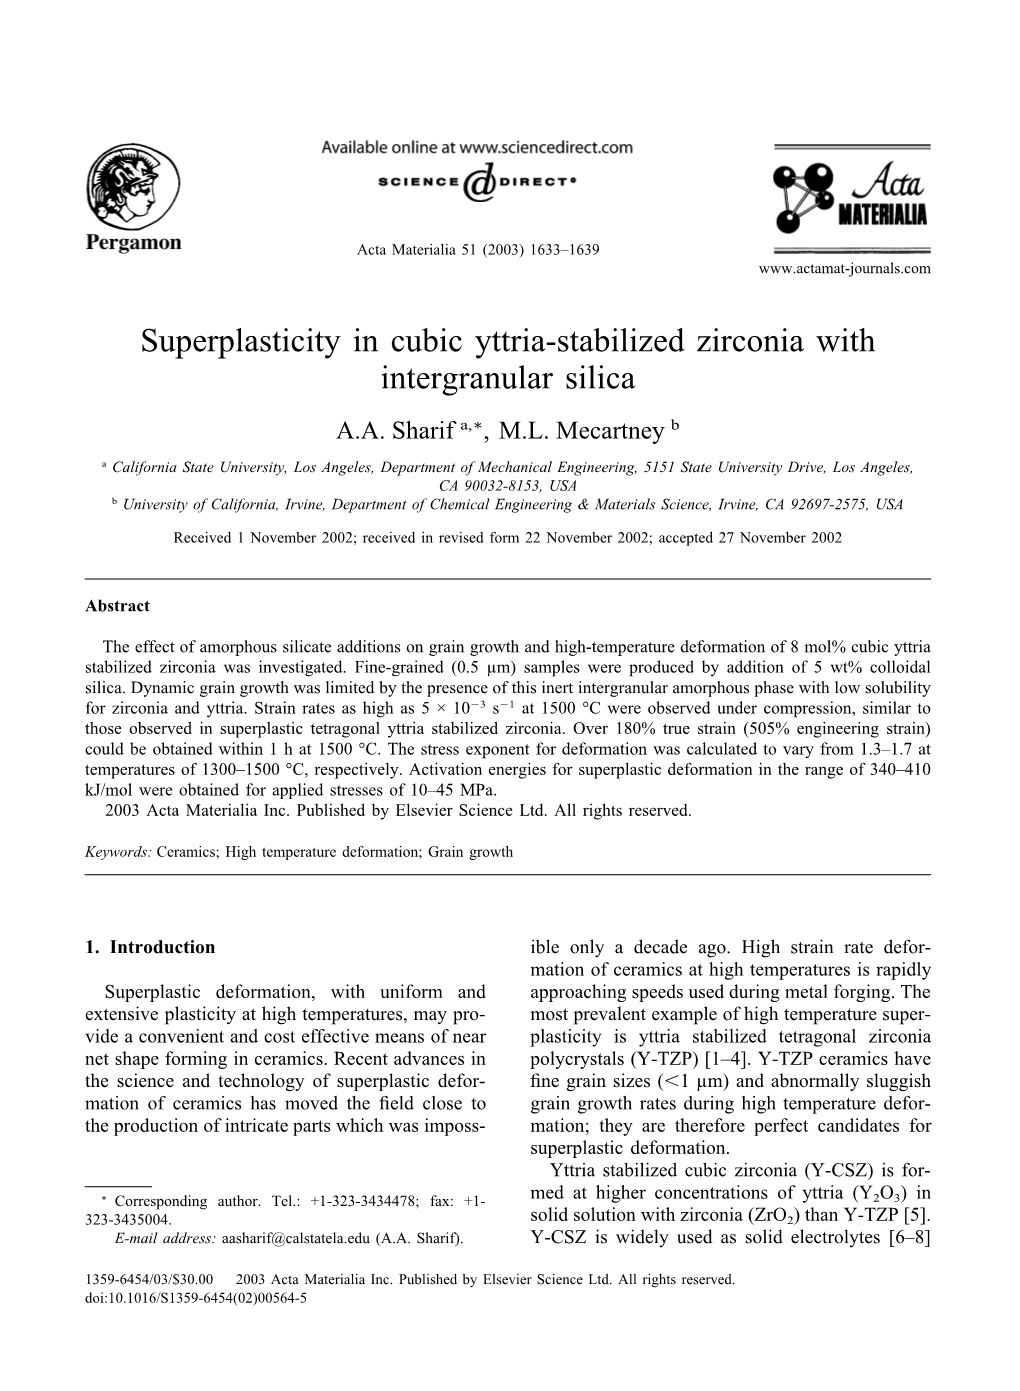 Superplasticity in Cubic Yttria-Stabilized Zirconia with Intergranular Silica A.A